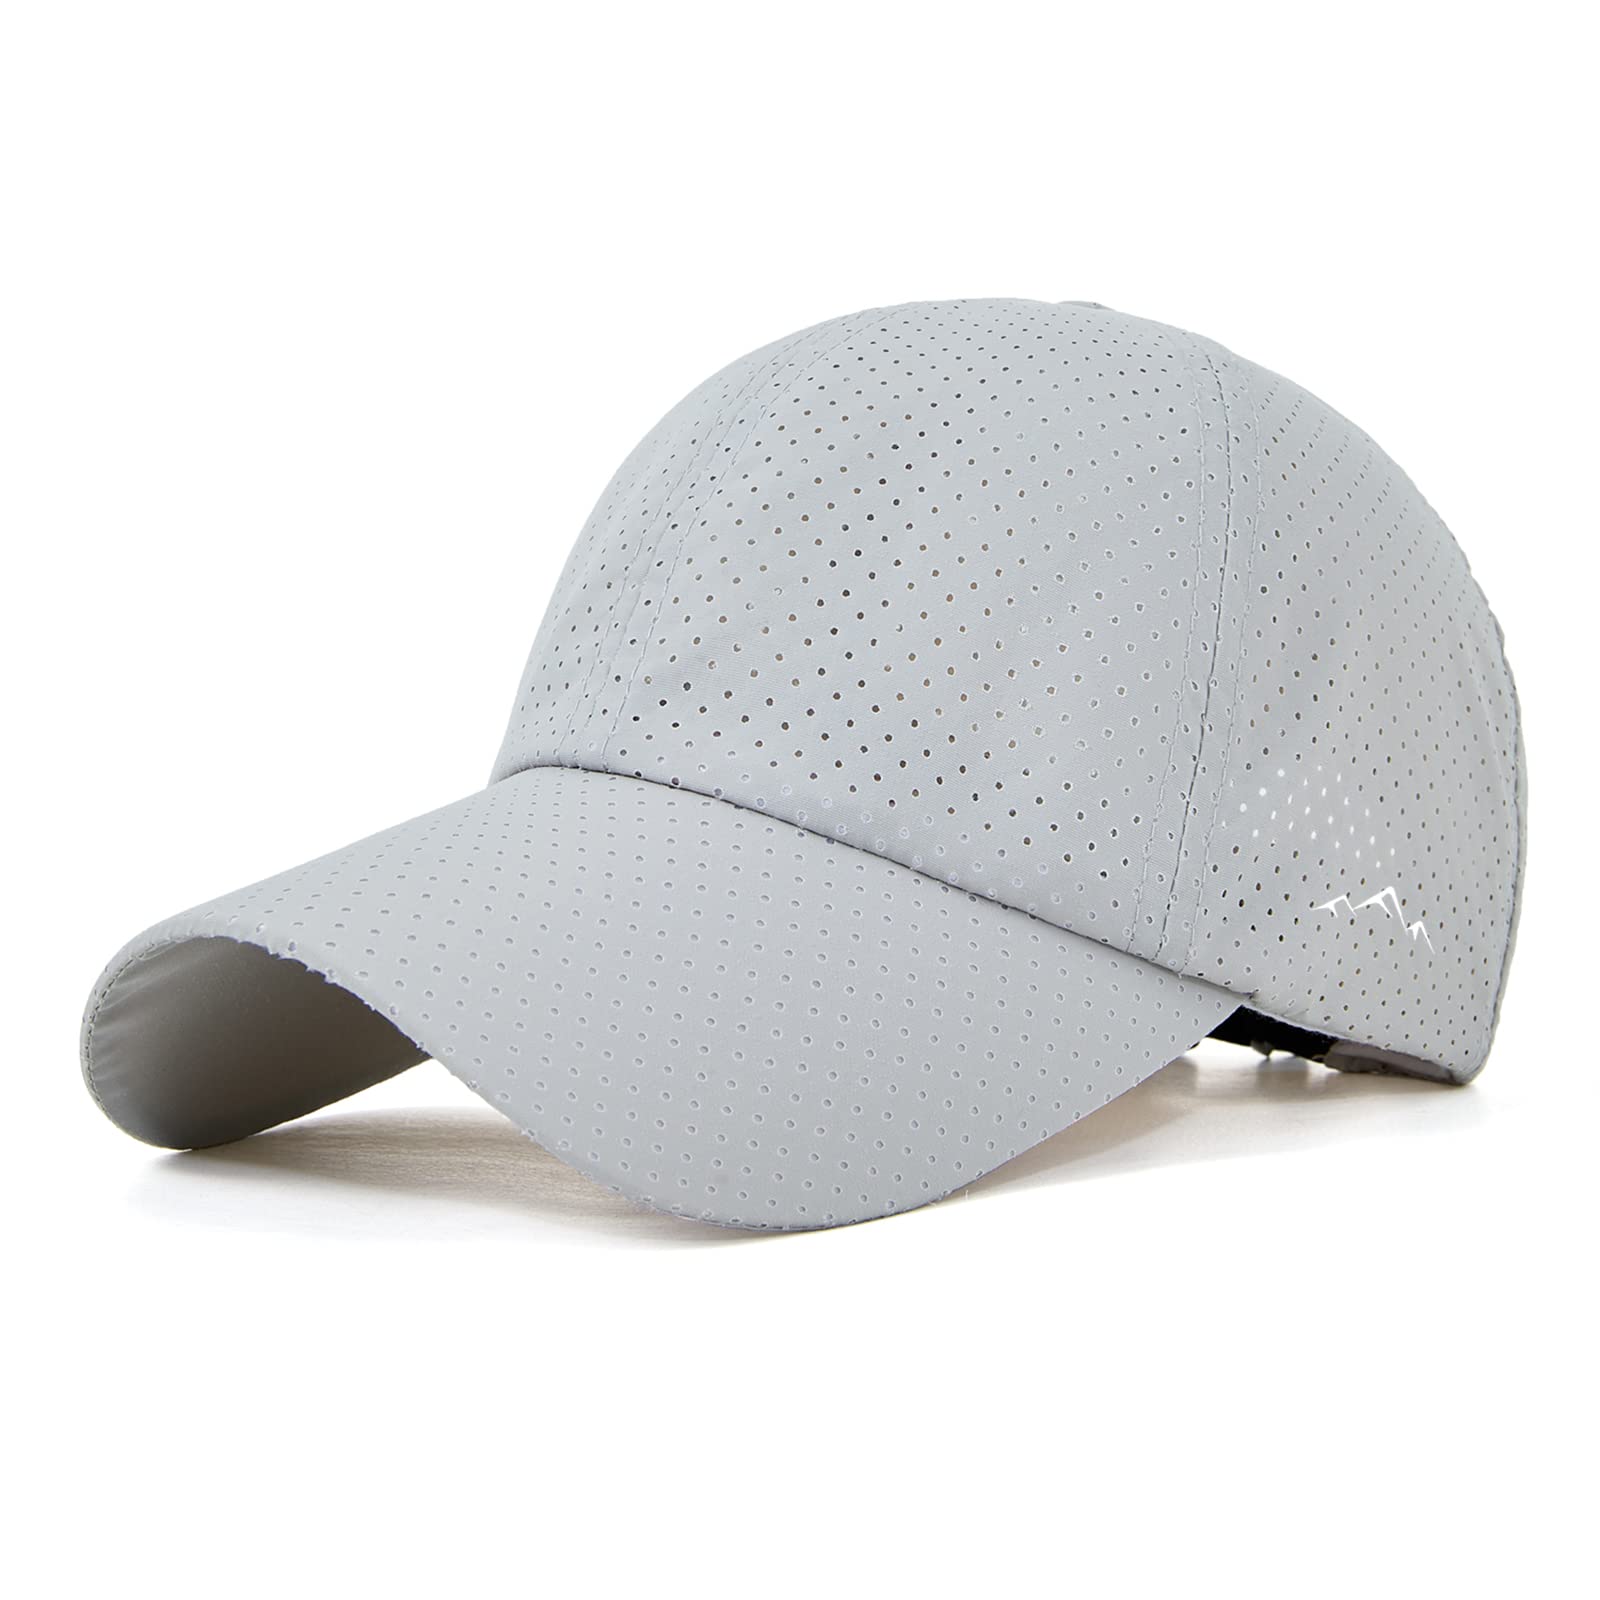 LoToba キャップ メンズ 大きいサイズ 深め 夏 帽子 メッシュキャップ レディース 無地 軽量 通気性 速乾性 シンプル アウトドア ゴルフ